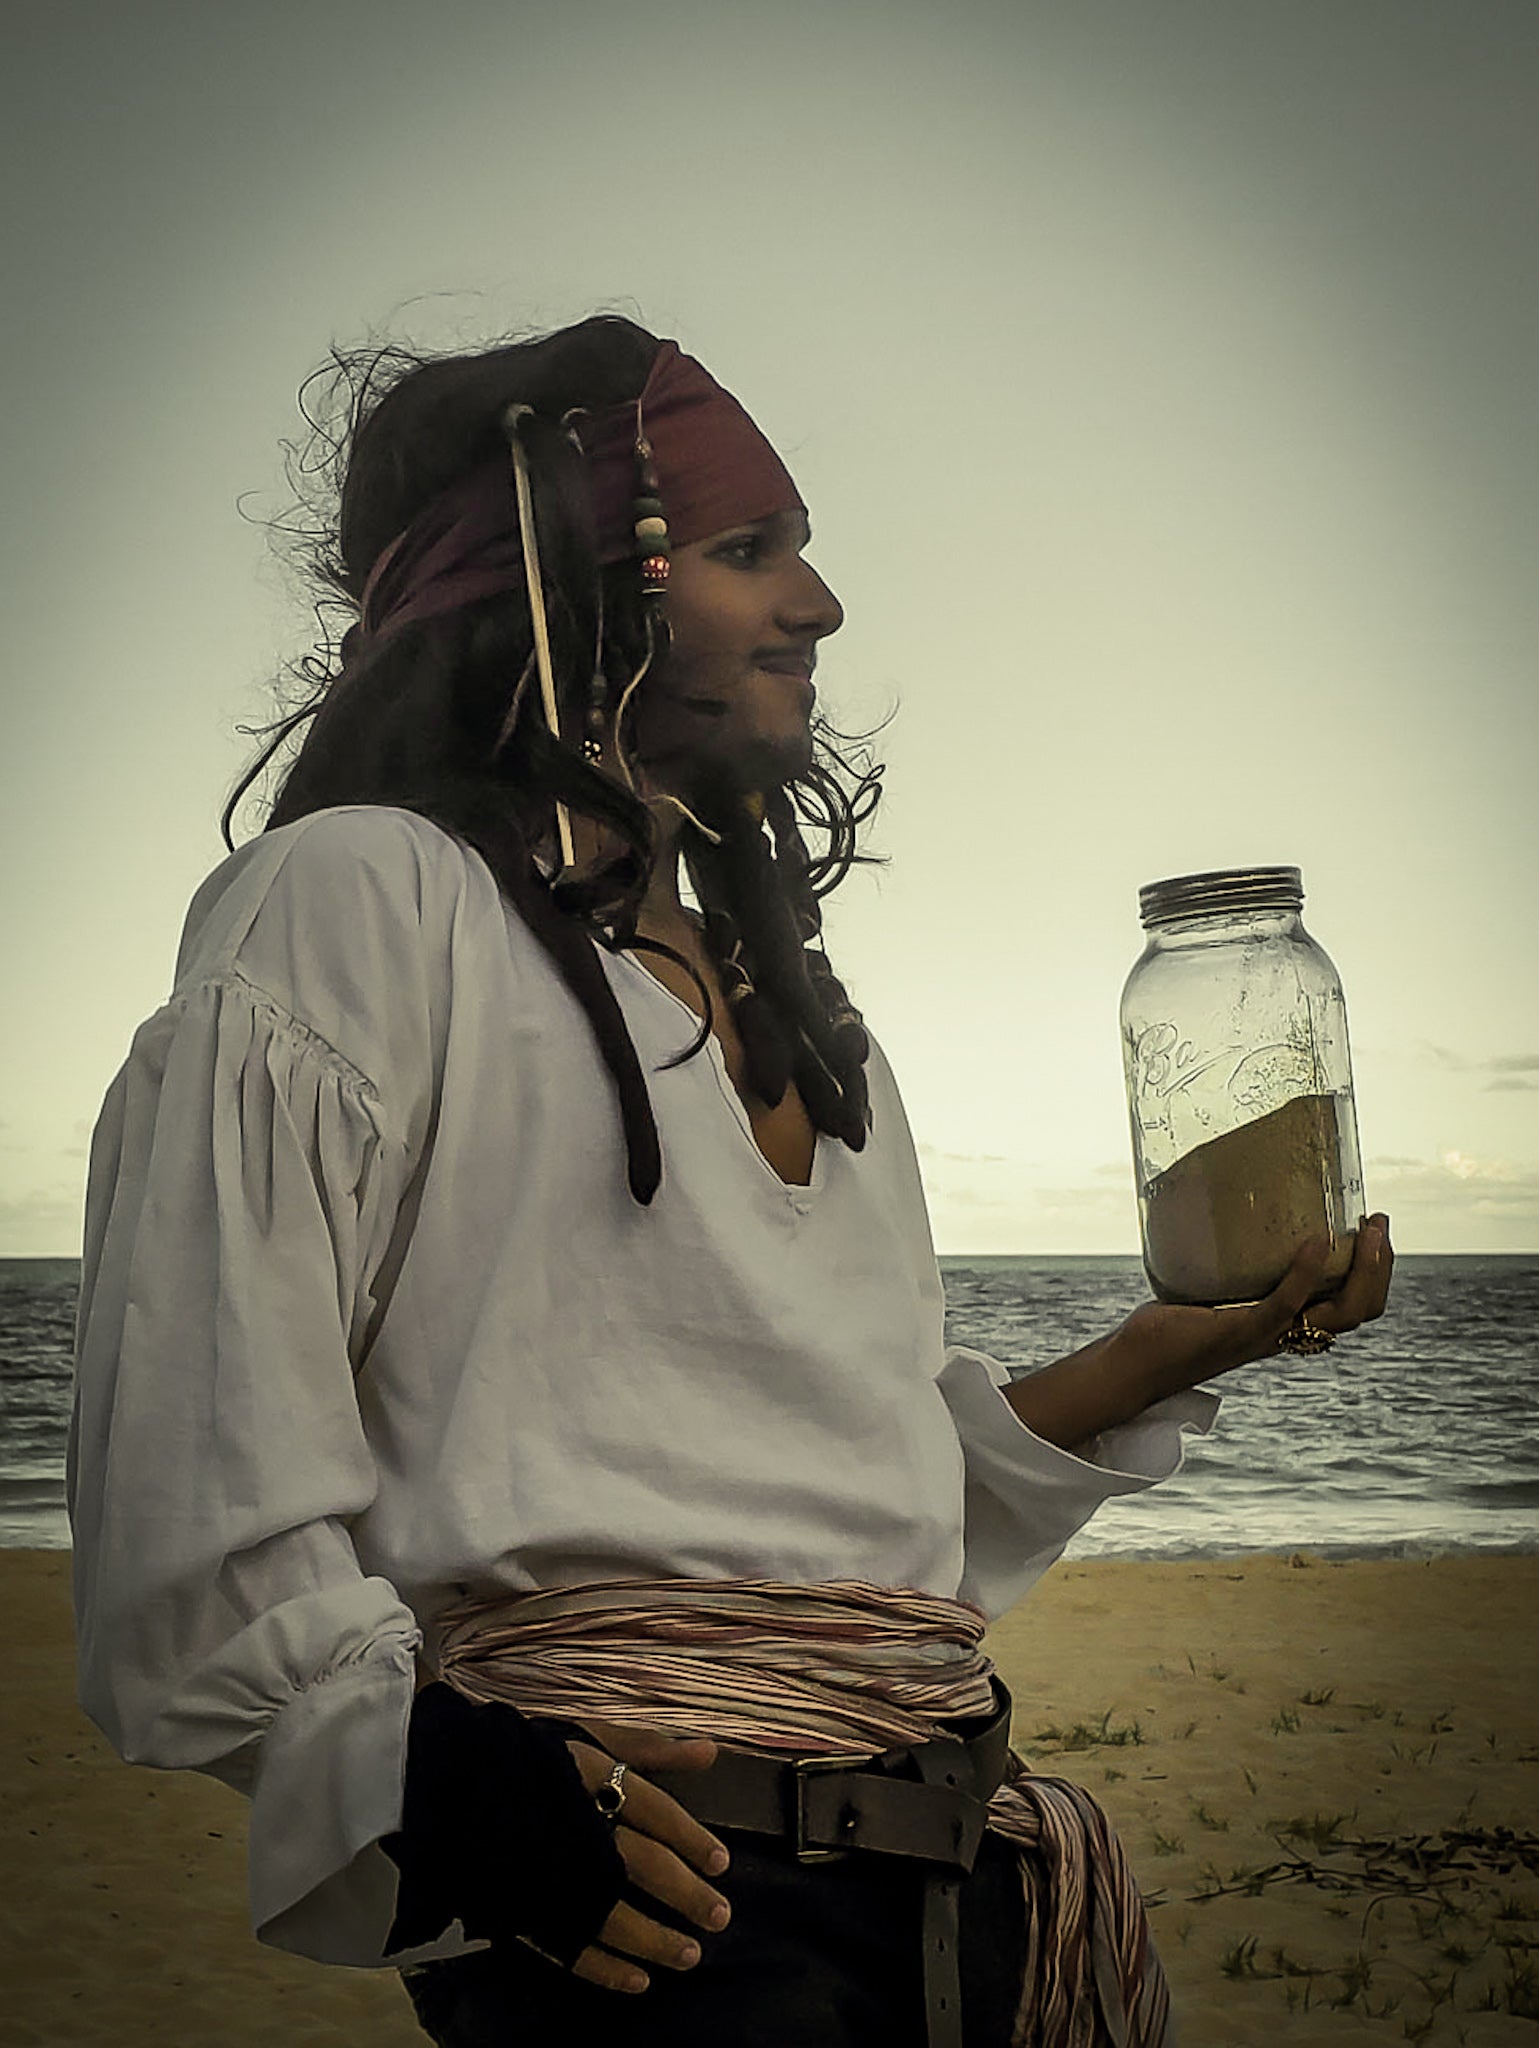 pirates of the carrabean gathered shirts, pirate gathgered shirts